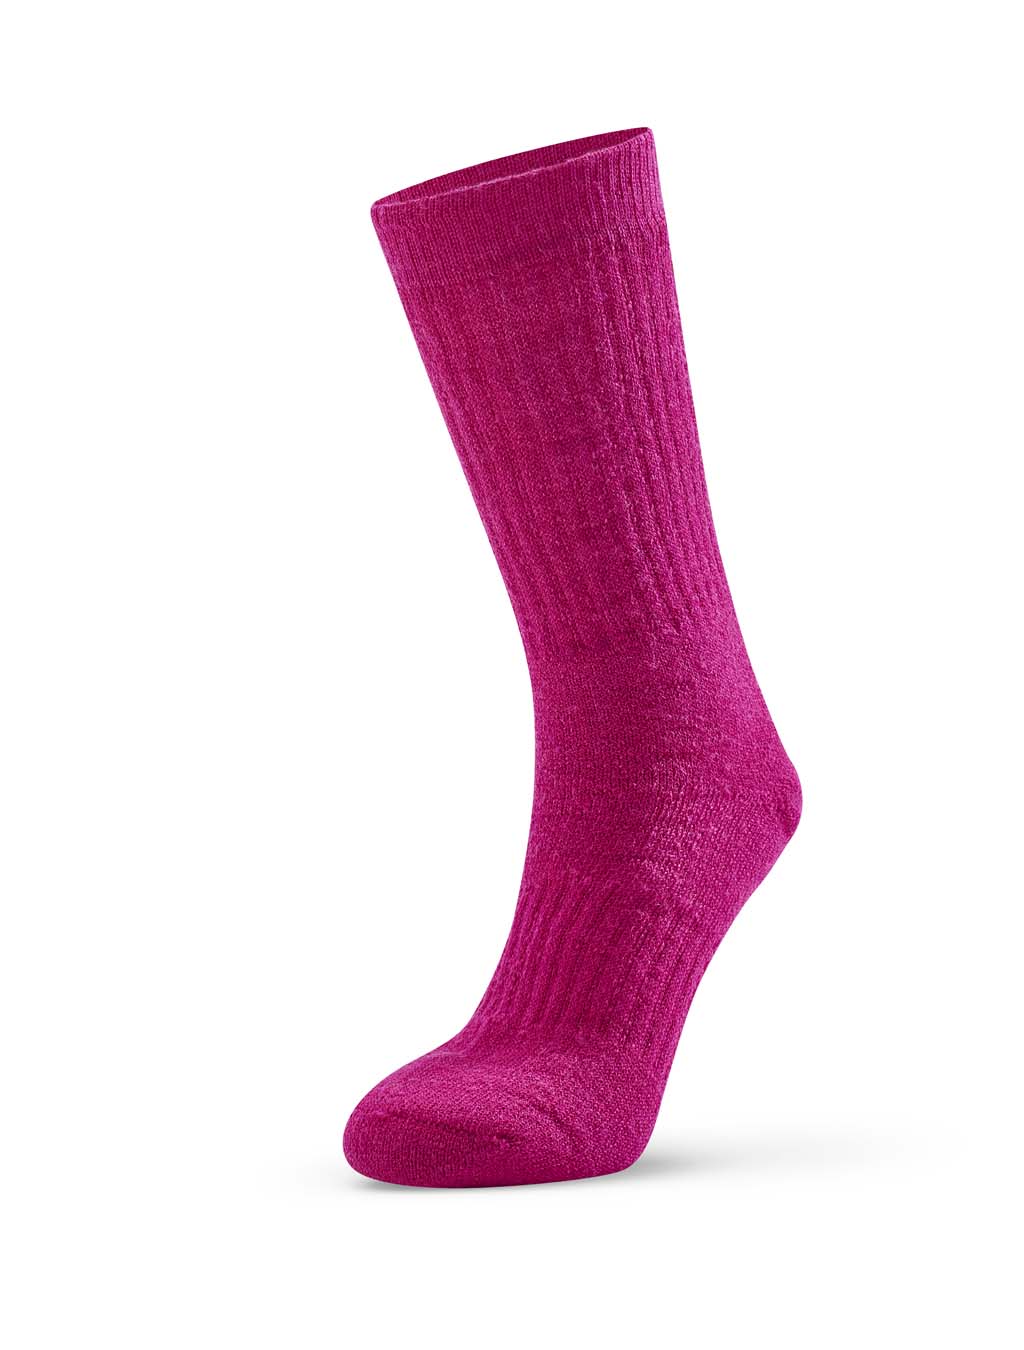 Southern Merino Sock - Fluro Pink